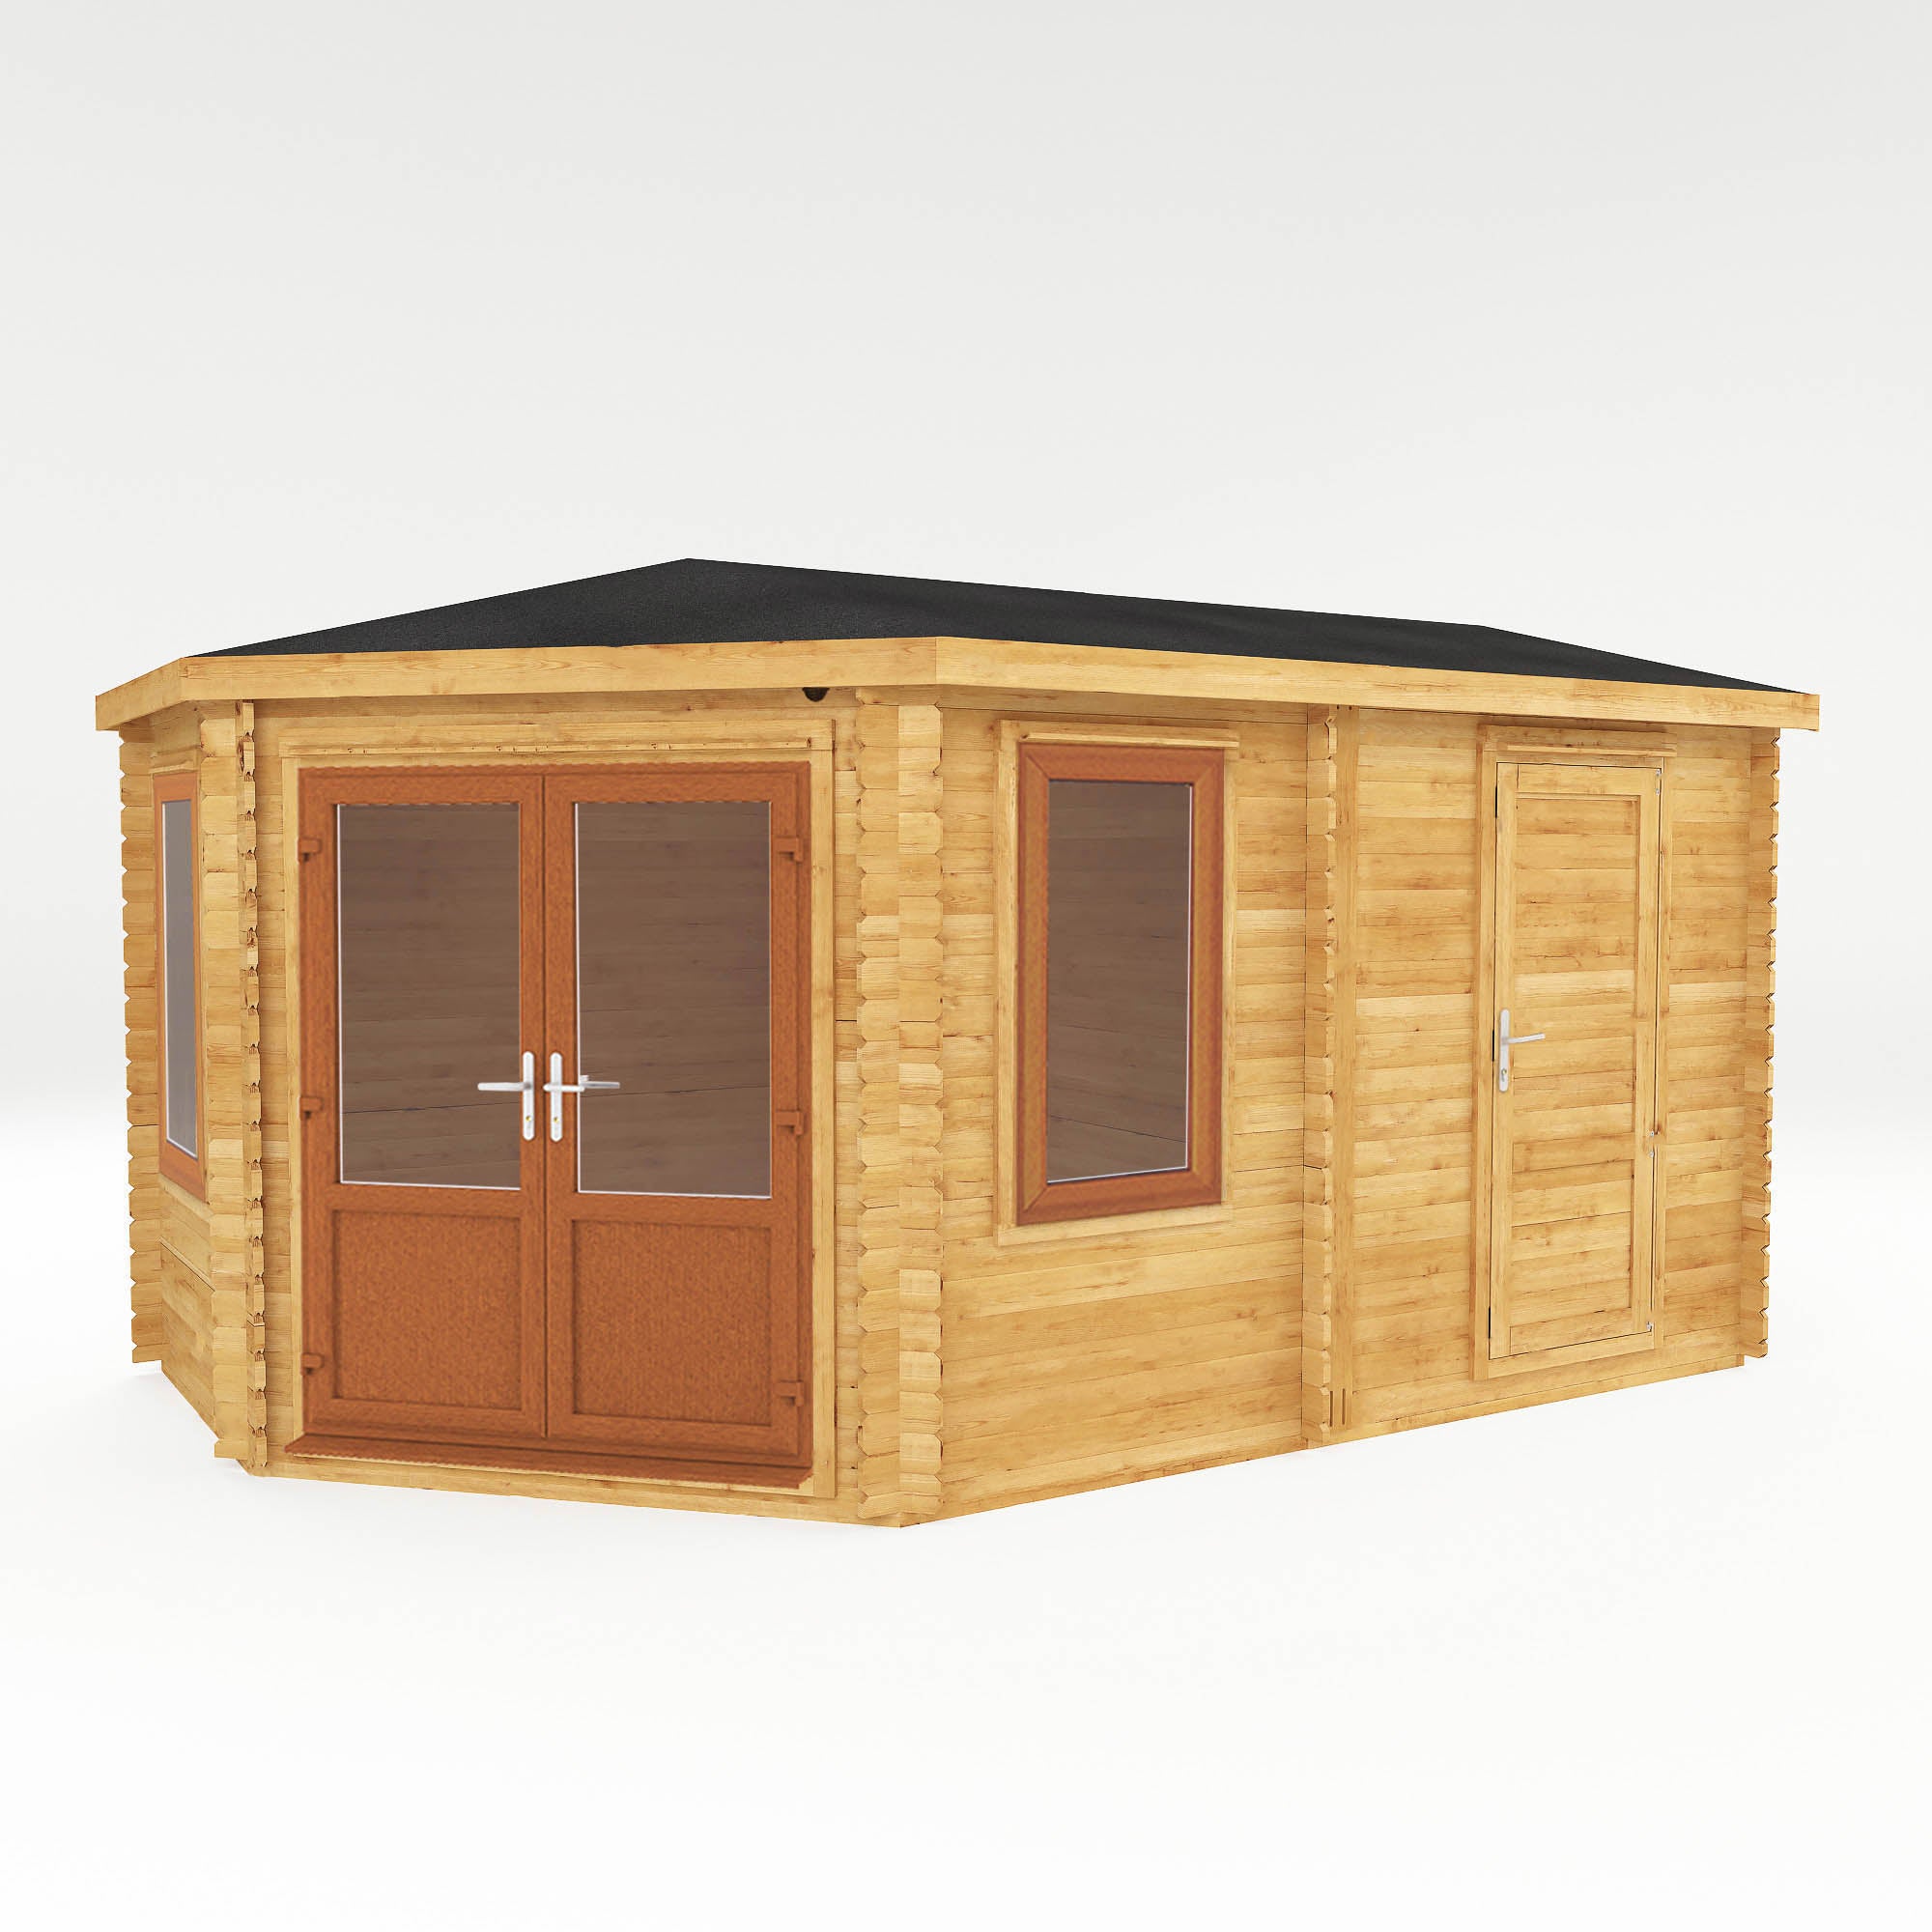 5m x 3m Corner Lodge Log Cabin With Side Shed - UPVC Oak